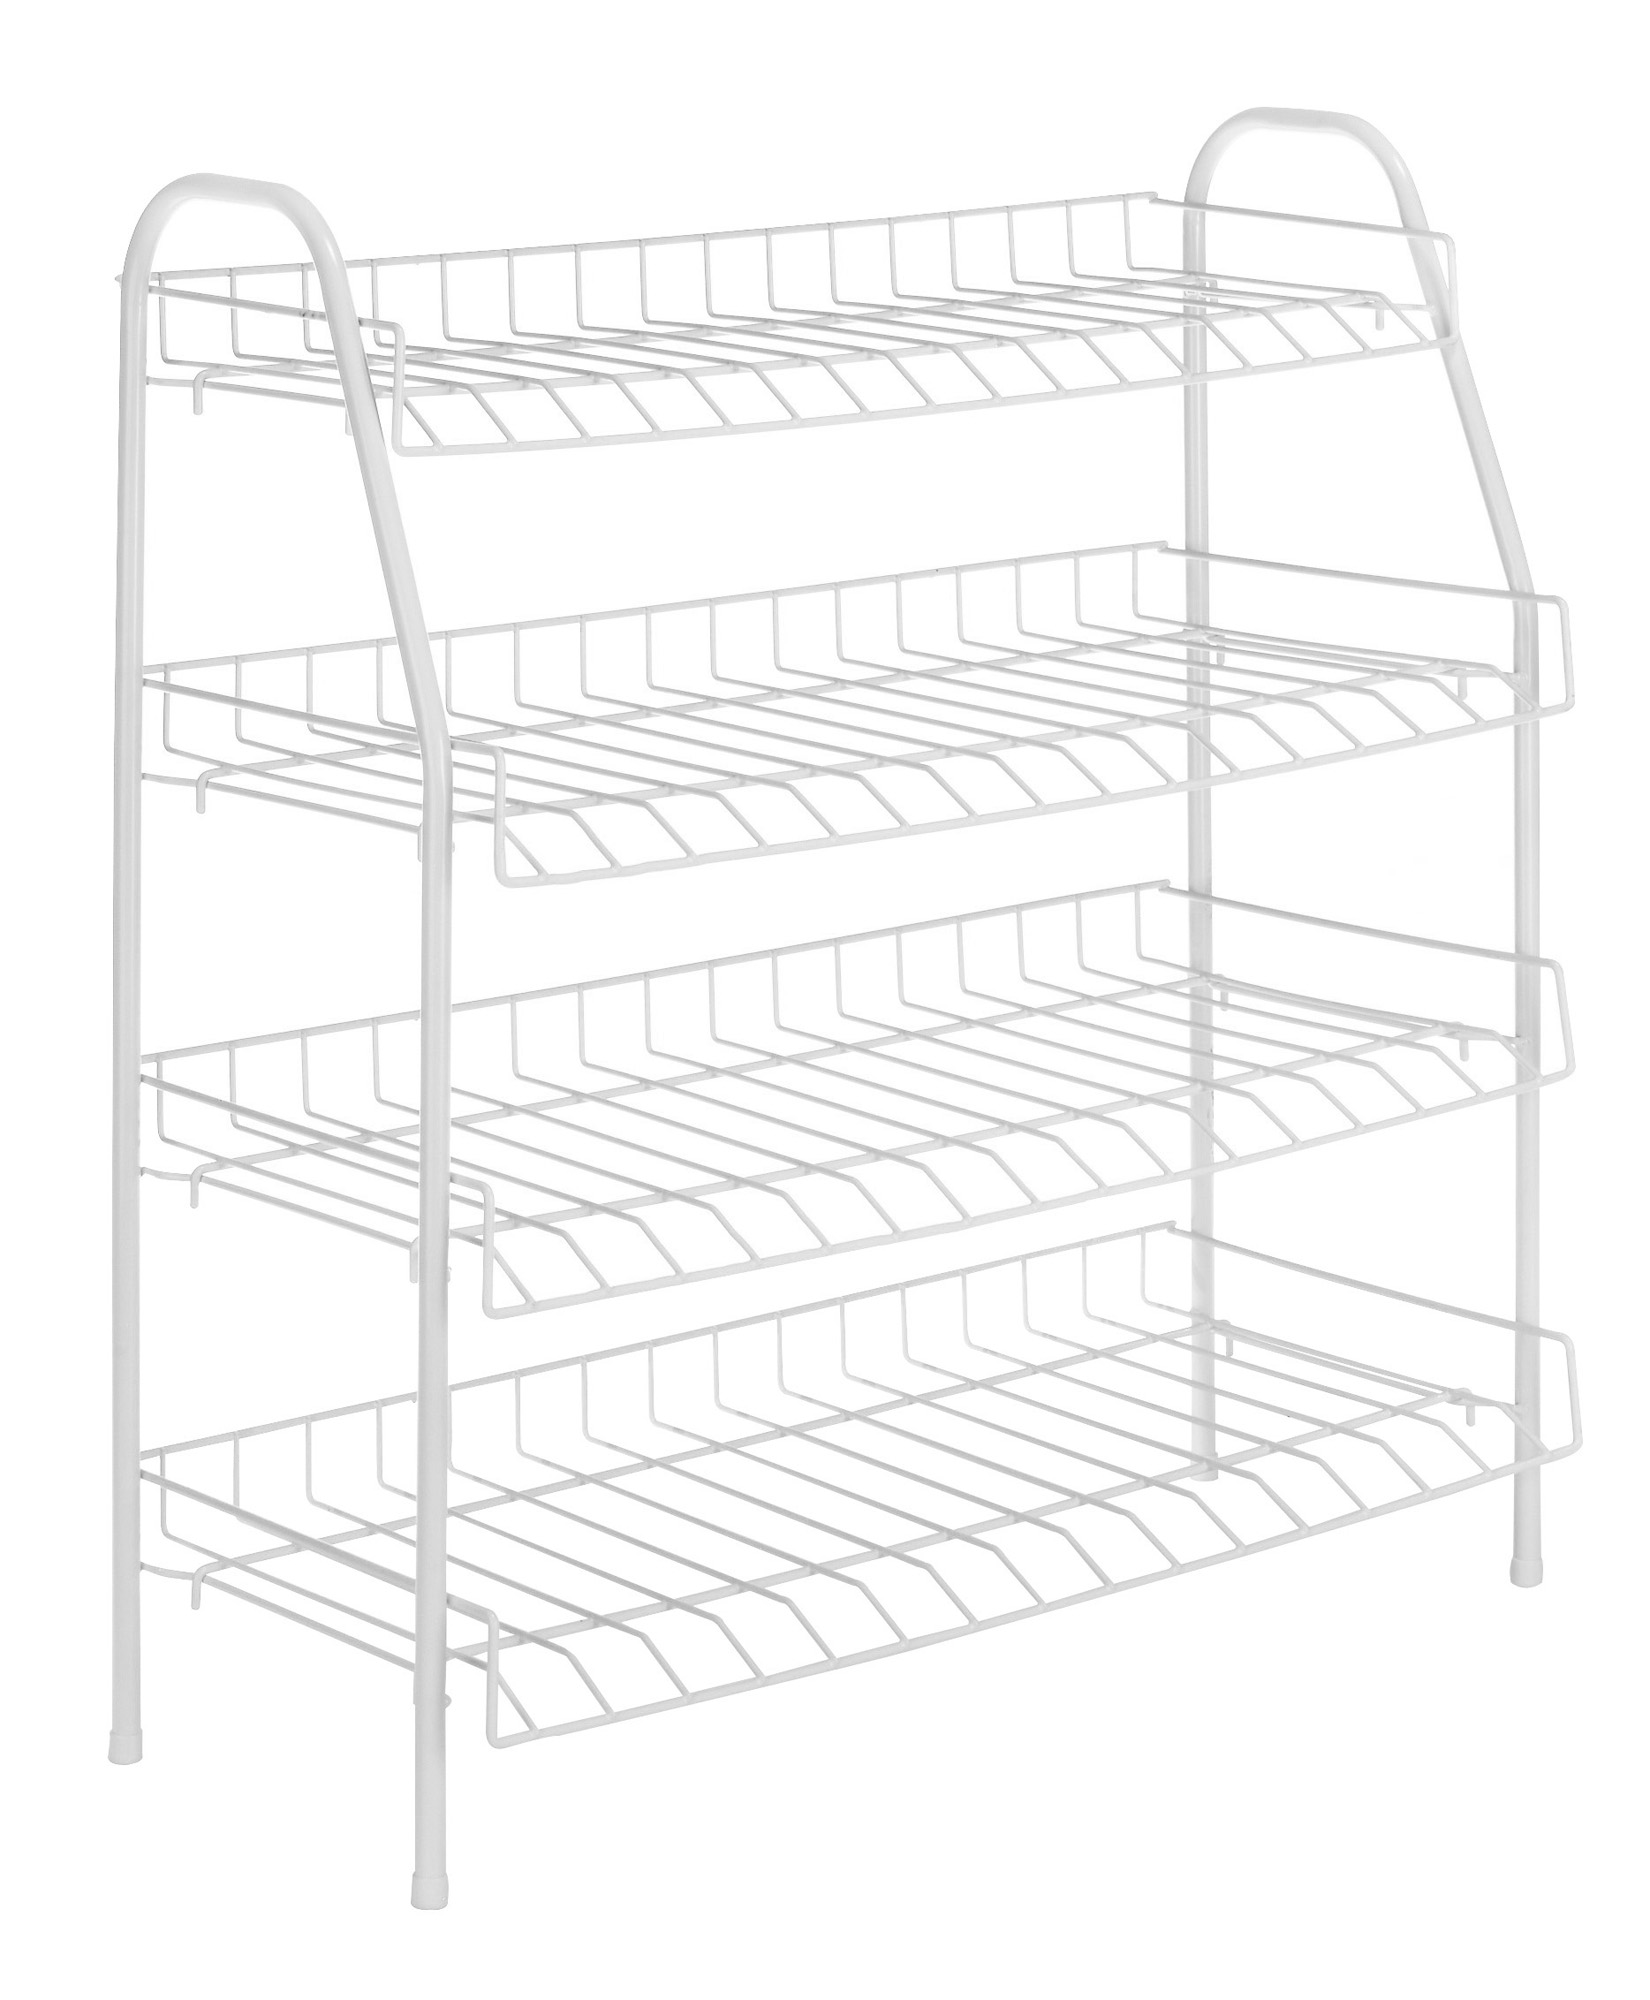 Whitmor 4-Tier Accessory Shelves Shoe Rack, Metal, White - image 1 of 8